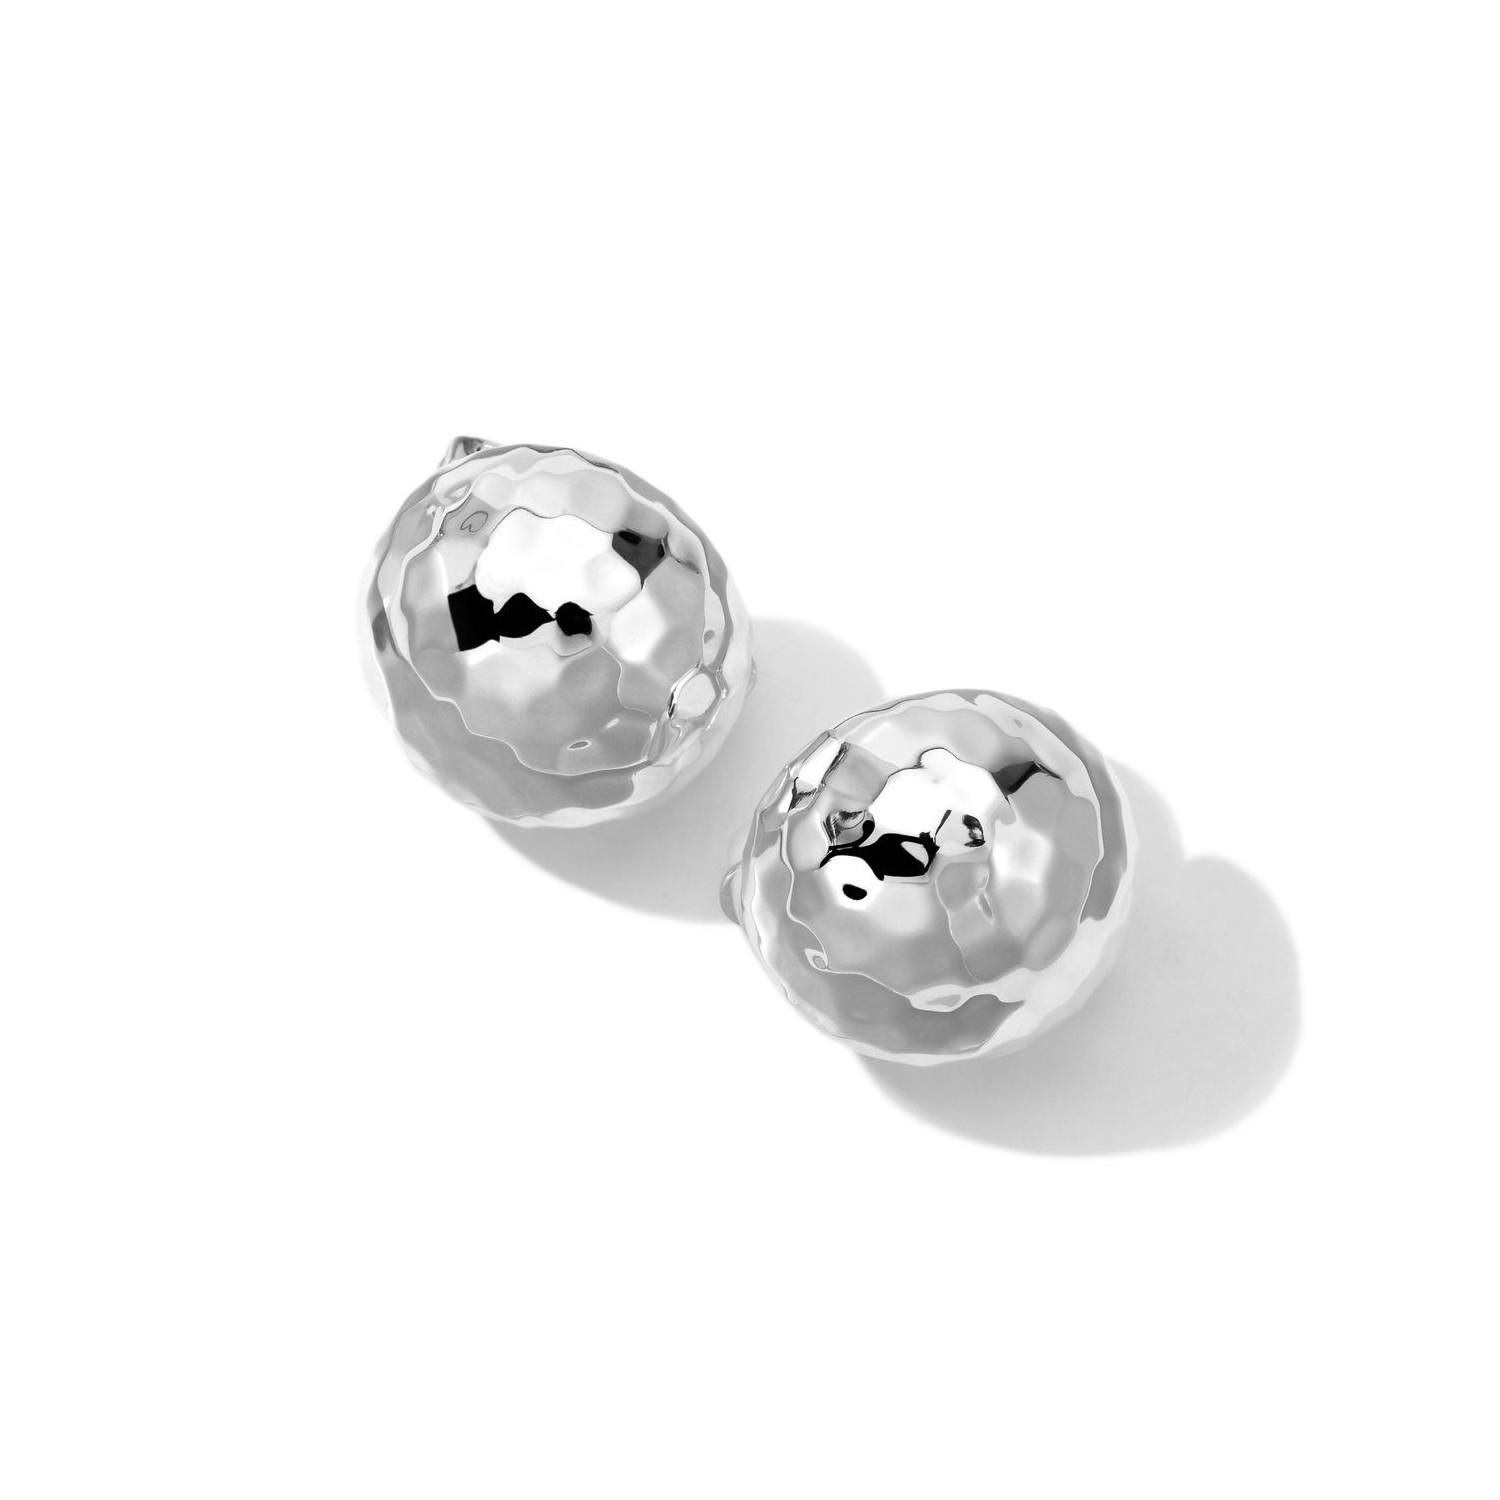 Ippolita Classico Pinball Stud Earrings in Sterling Silver